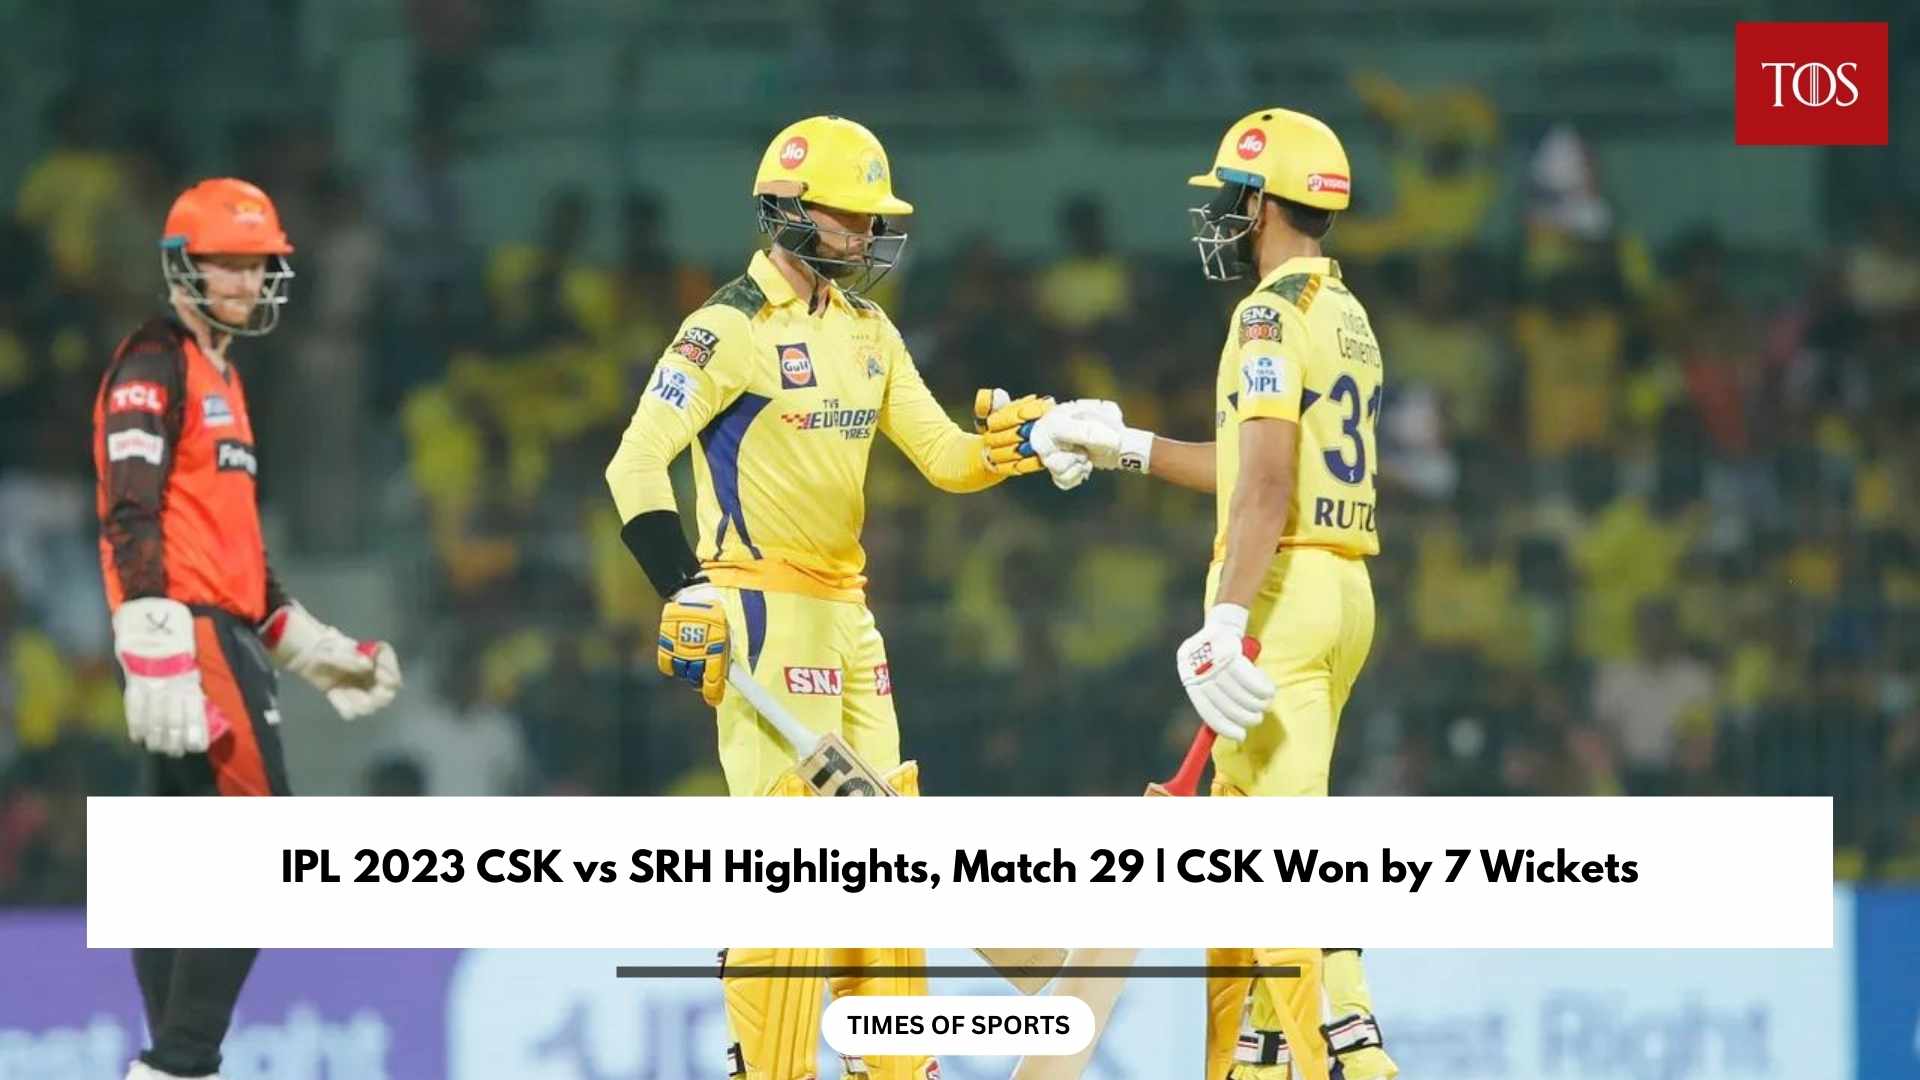 IPL 2023 CSK vs SRH Highlights, Match 29 CSK Won by 7 Wickets